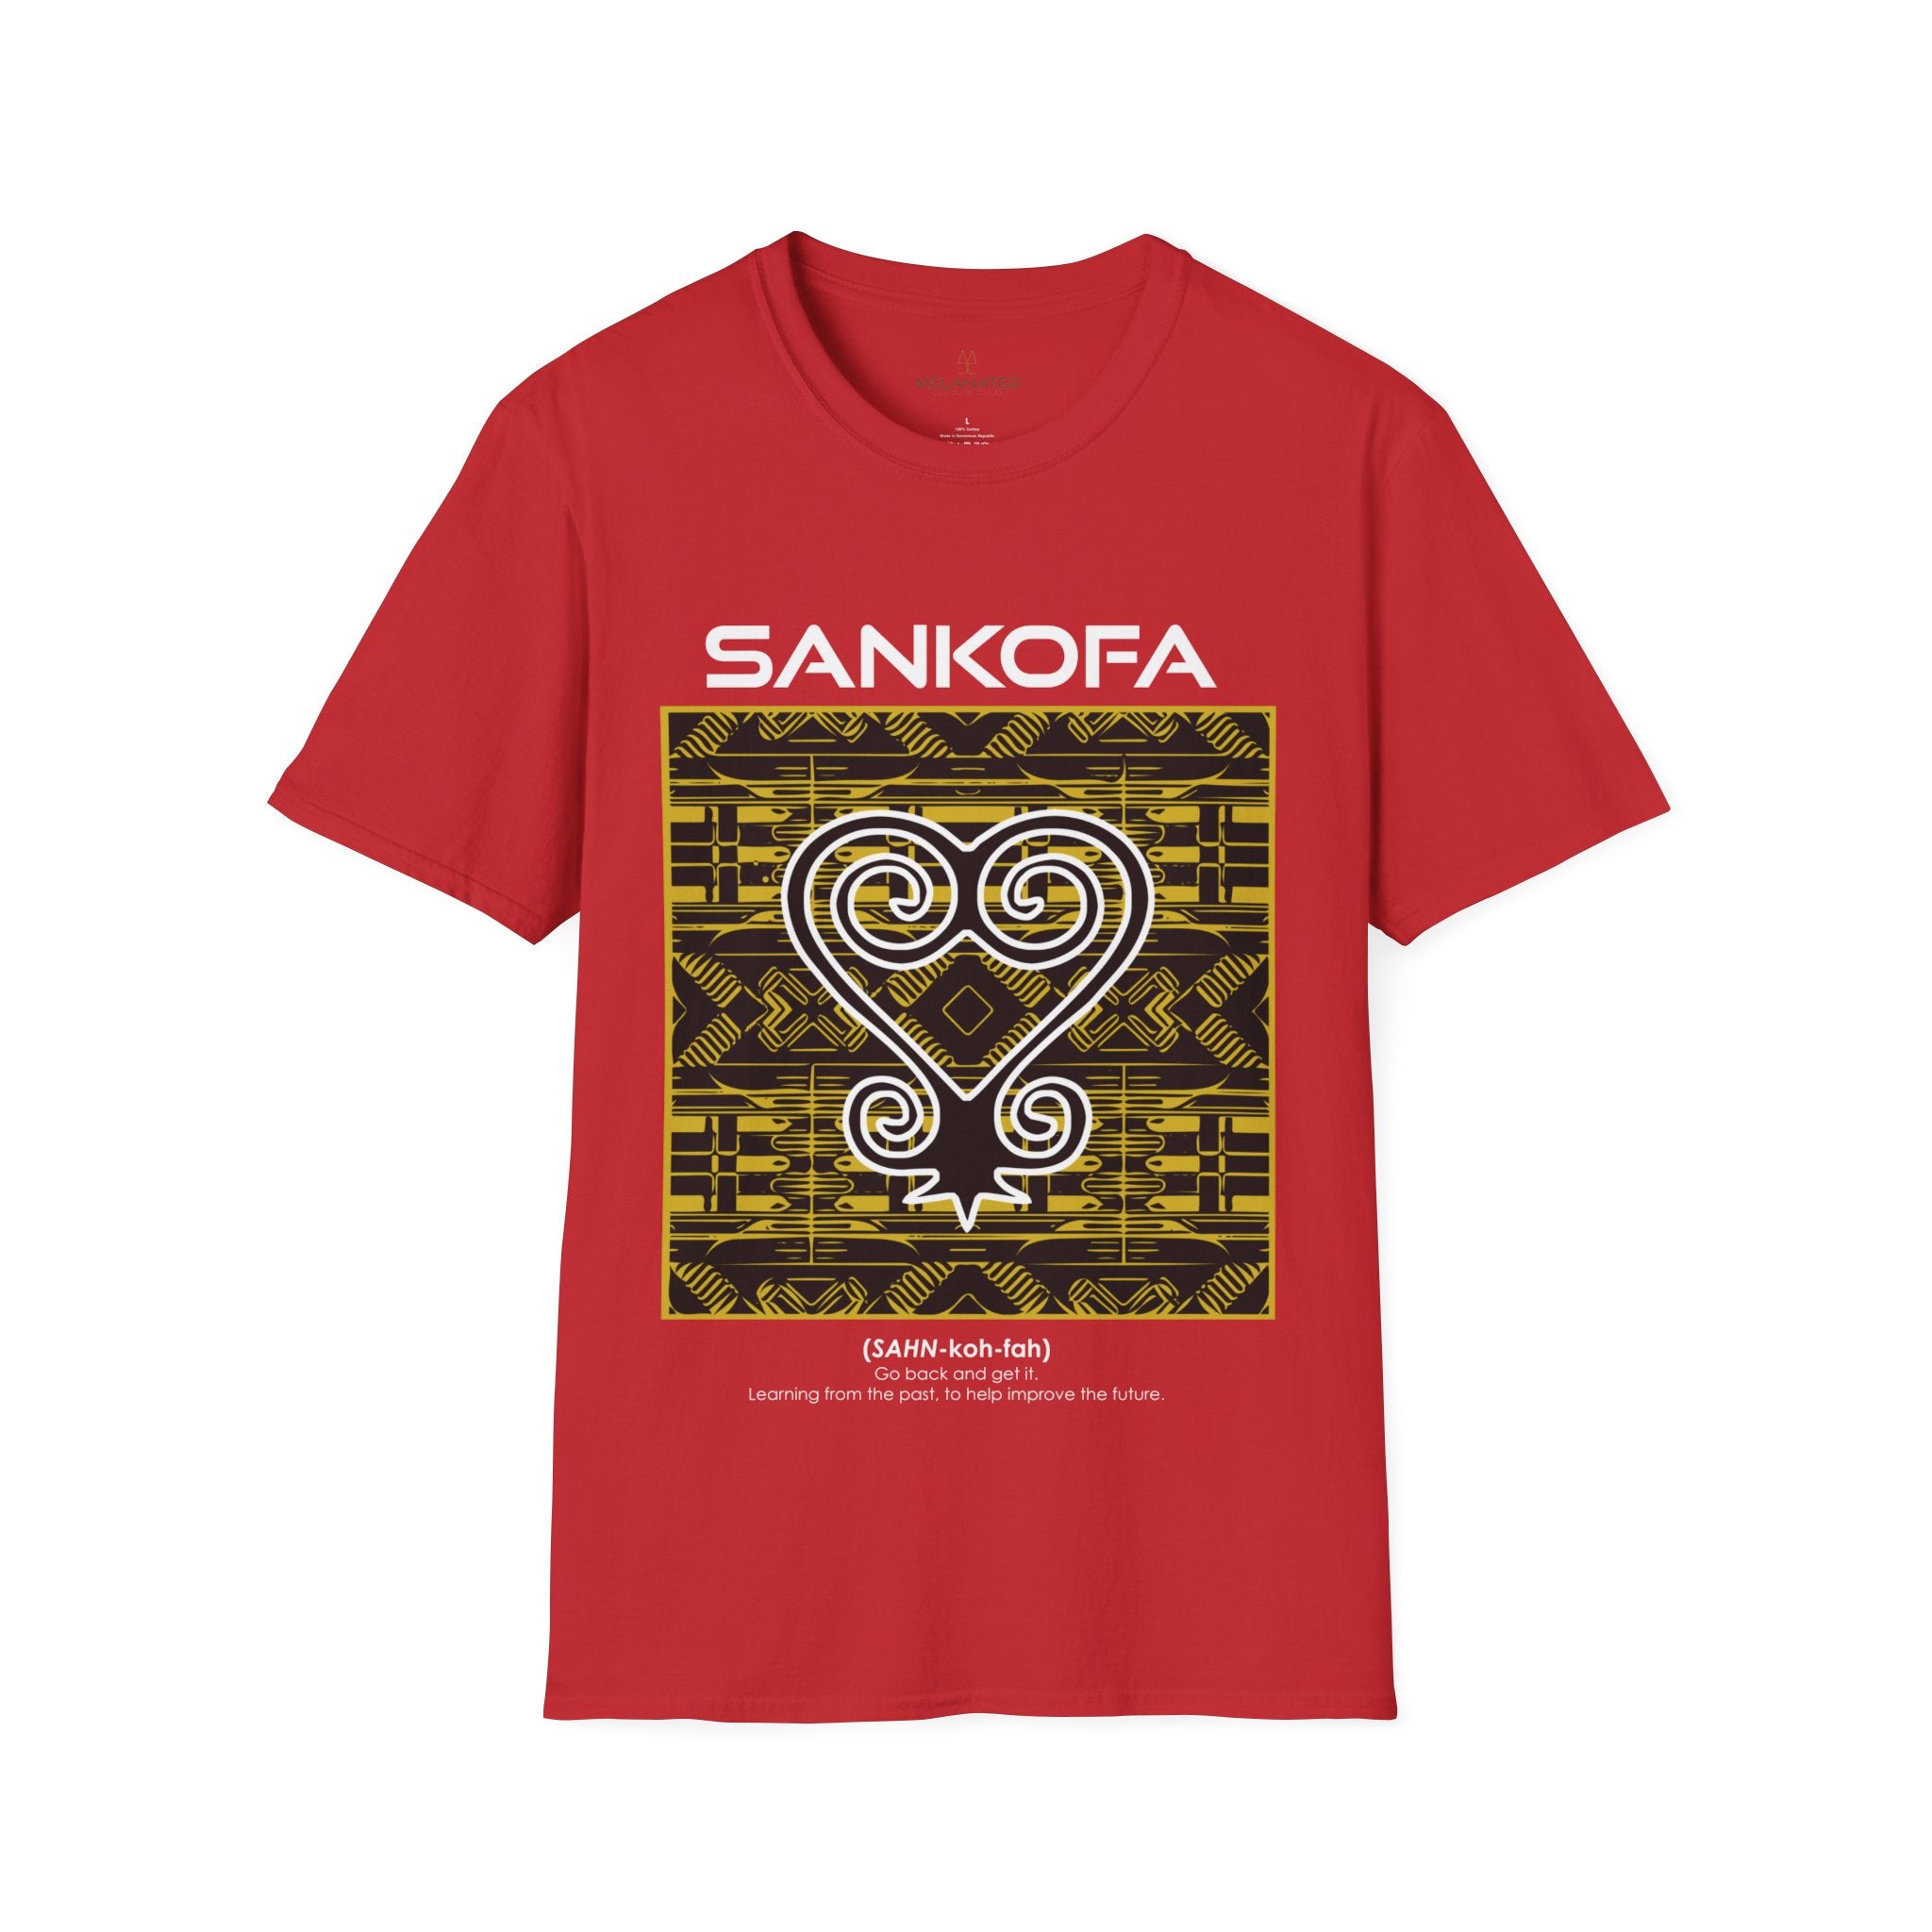 Adinka Sankofa African Tee Shirt in red.